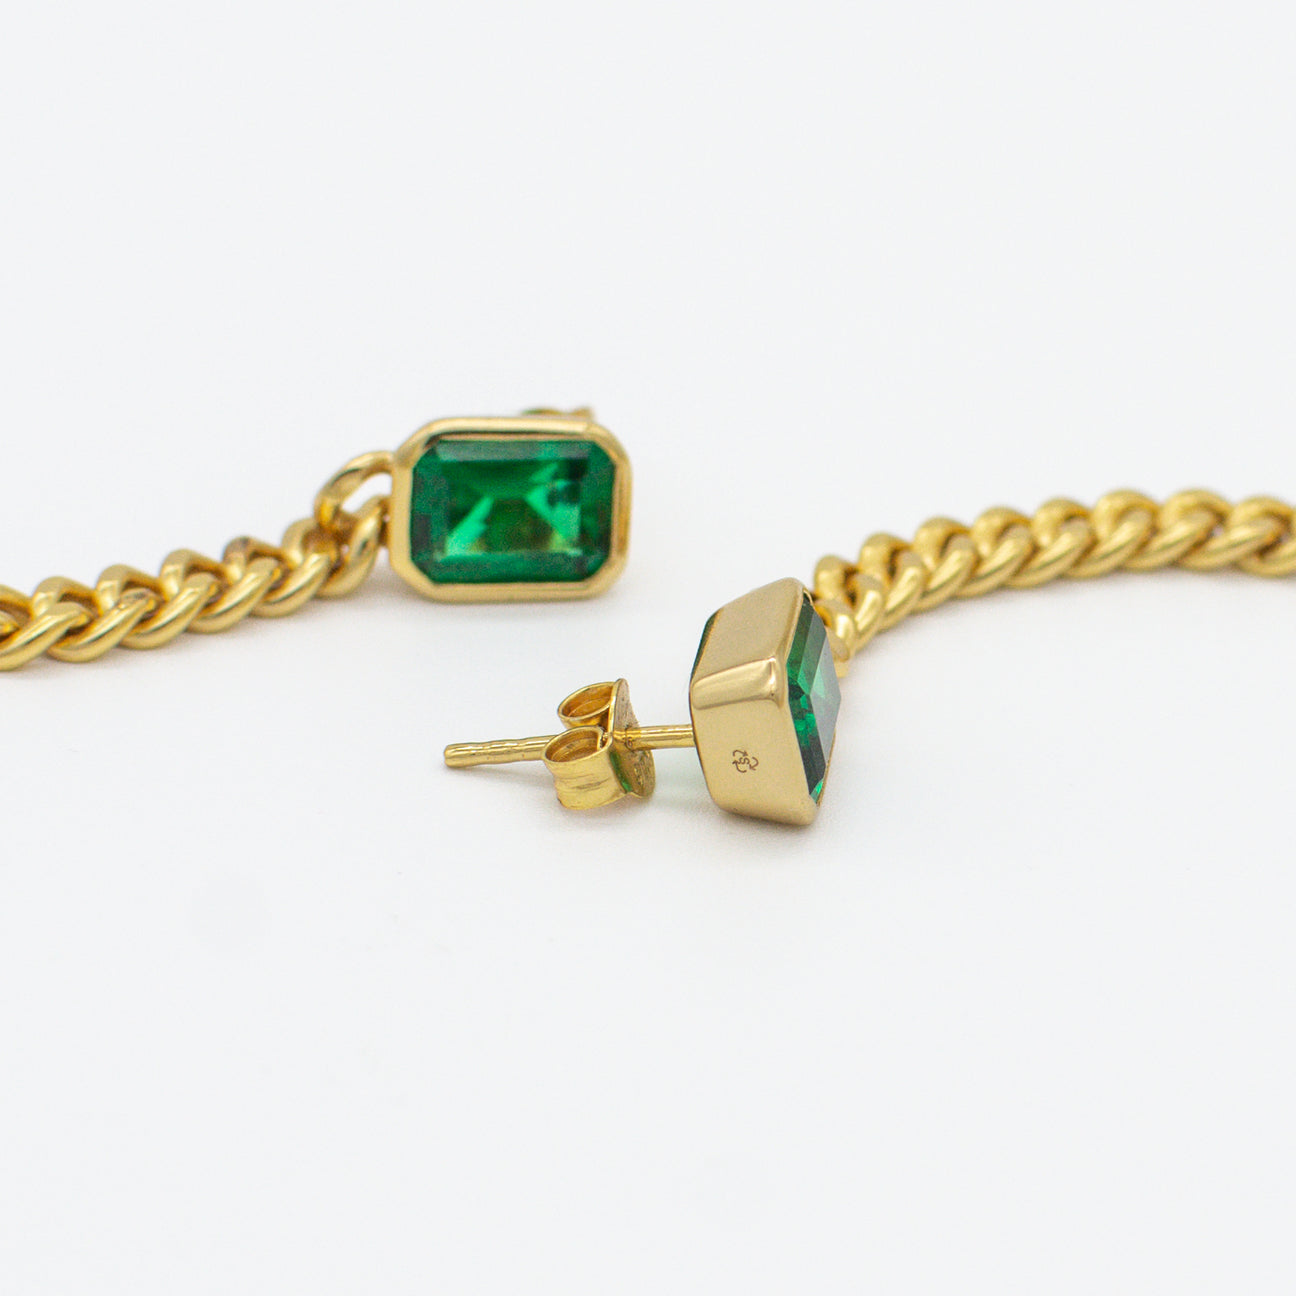 Manhattan Chain Earrings w Green Stone